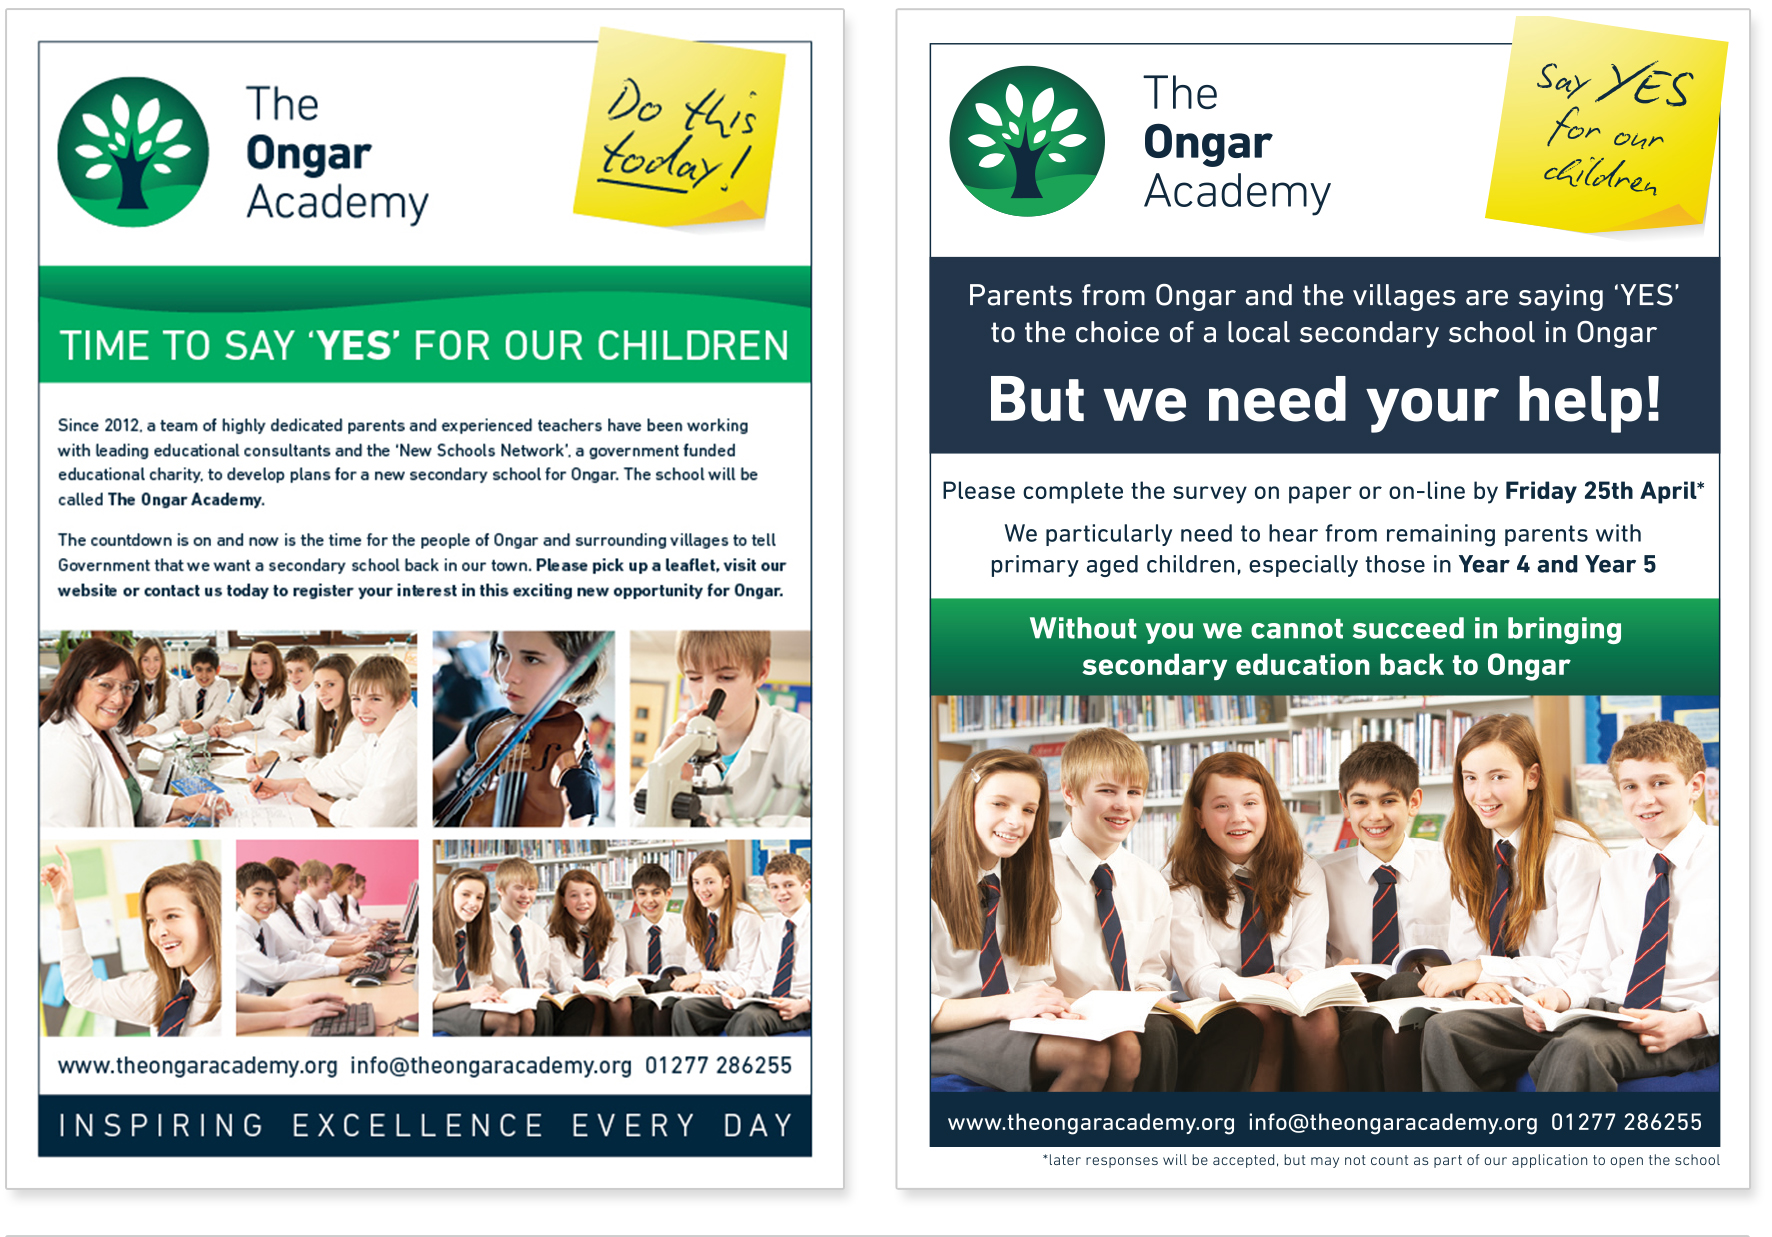 Advertisements for Ongar Academy School